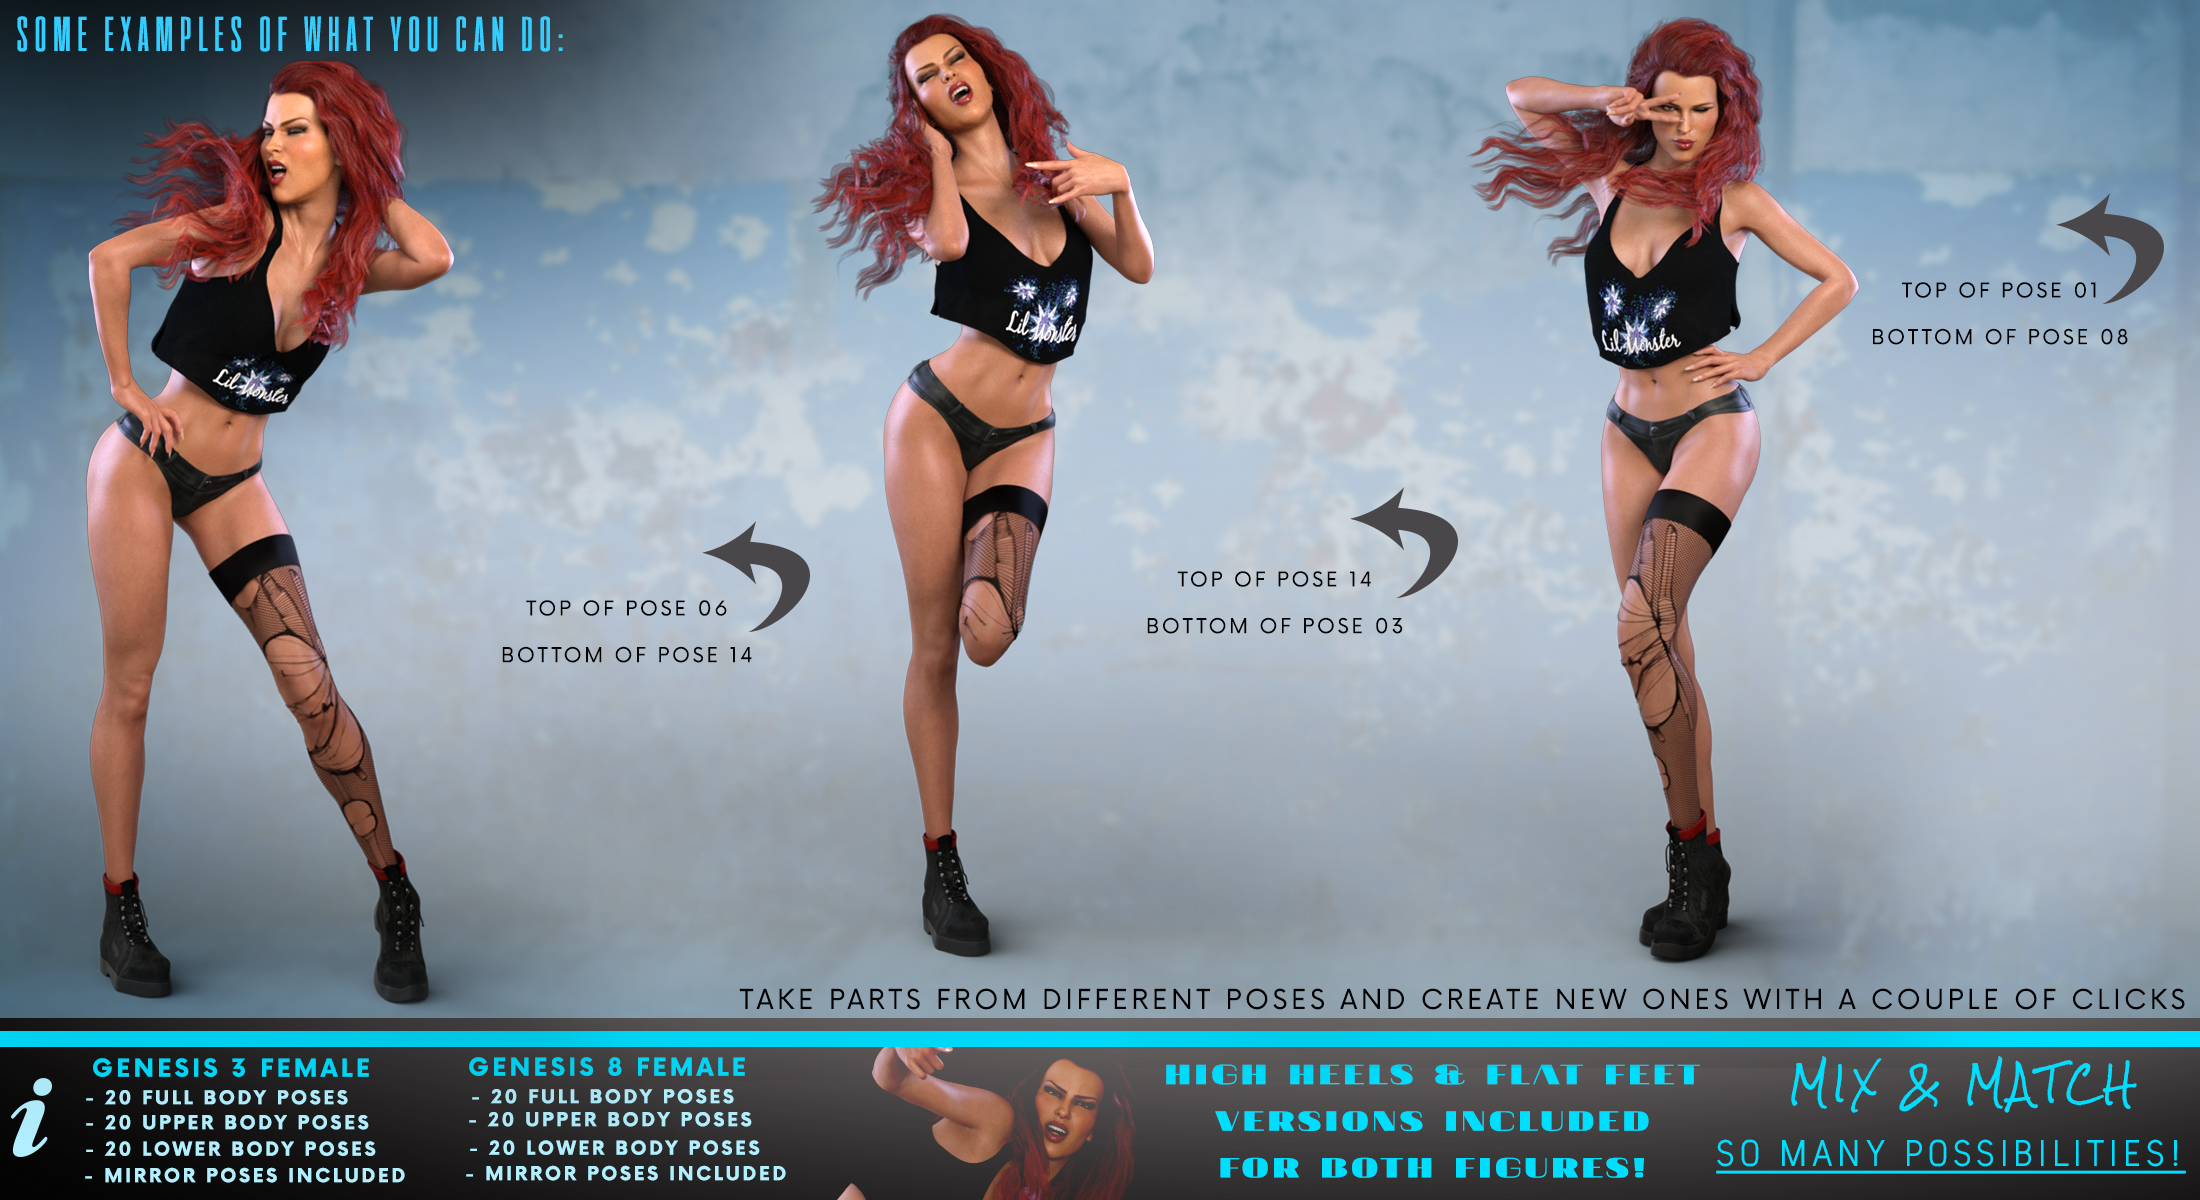 Z Firestarter - Poses and Partials for the Genesis 3 & 8 Female by: Zeddicuss, 3D Models by Daz 3D